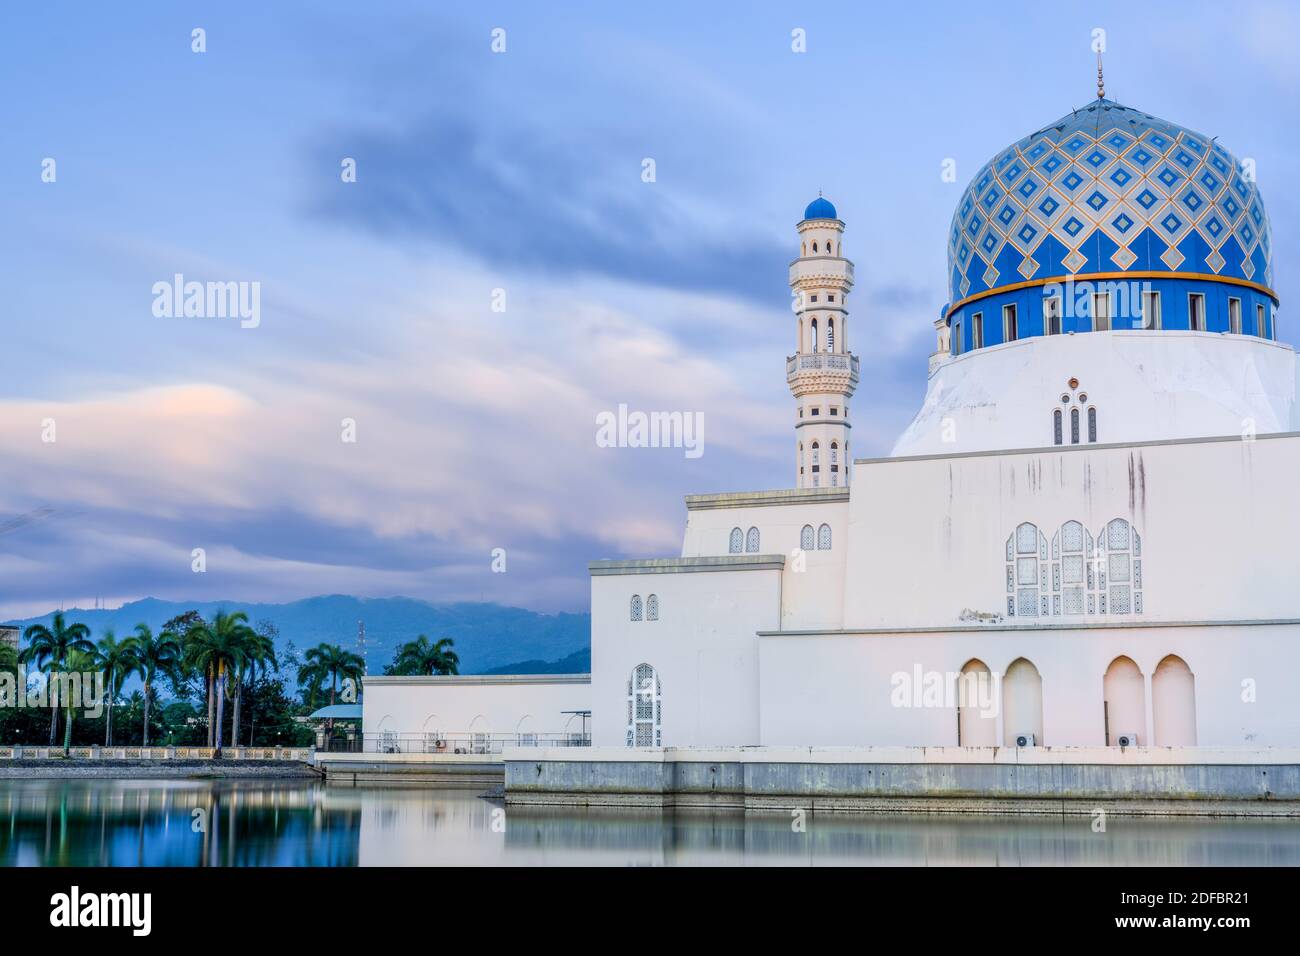 La Moschea di Kota Kinabalu, conosciuta localmente come Masjid Bandaraya Kota Kinabalu a Sabah, Malesia. Foto Stock